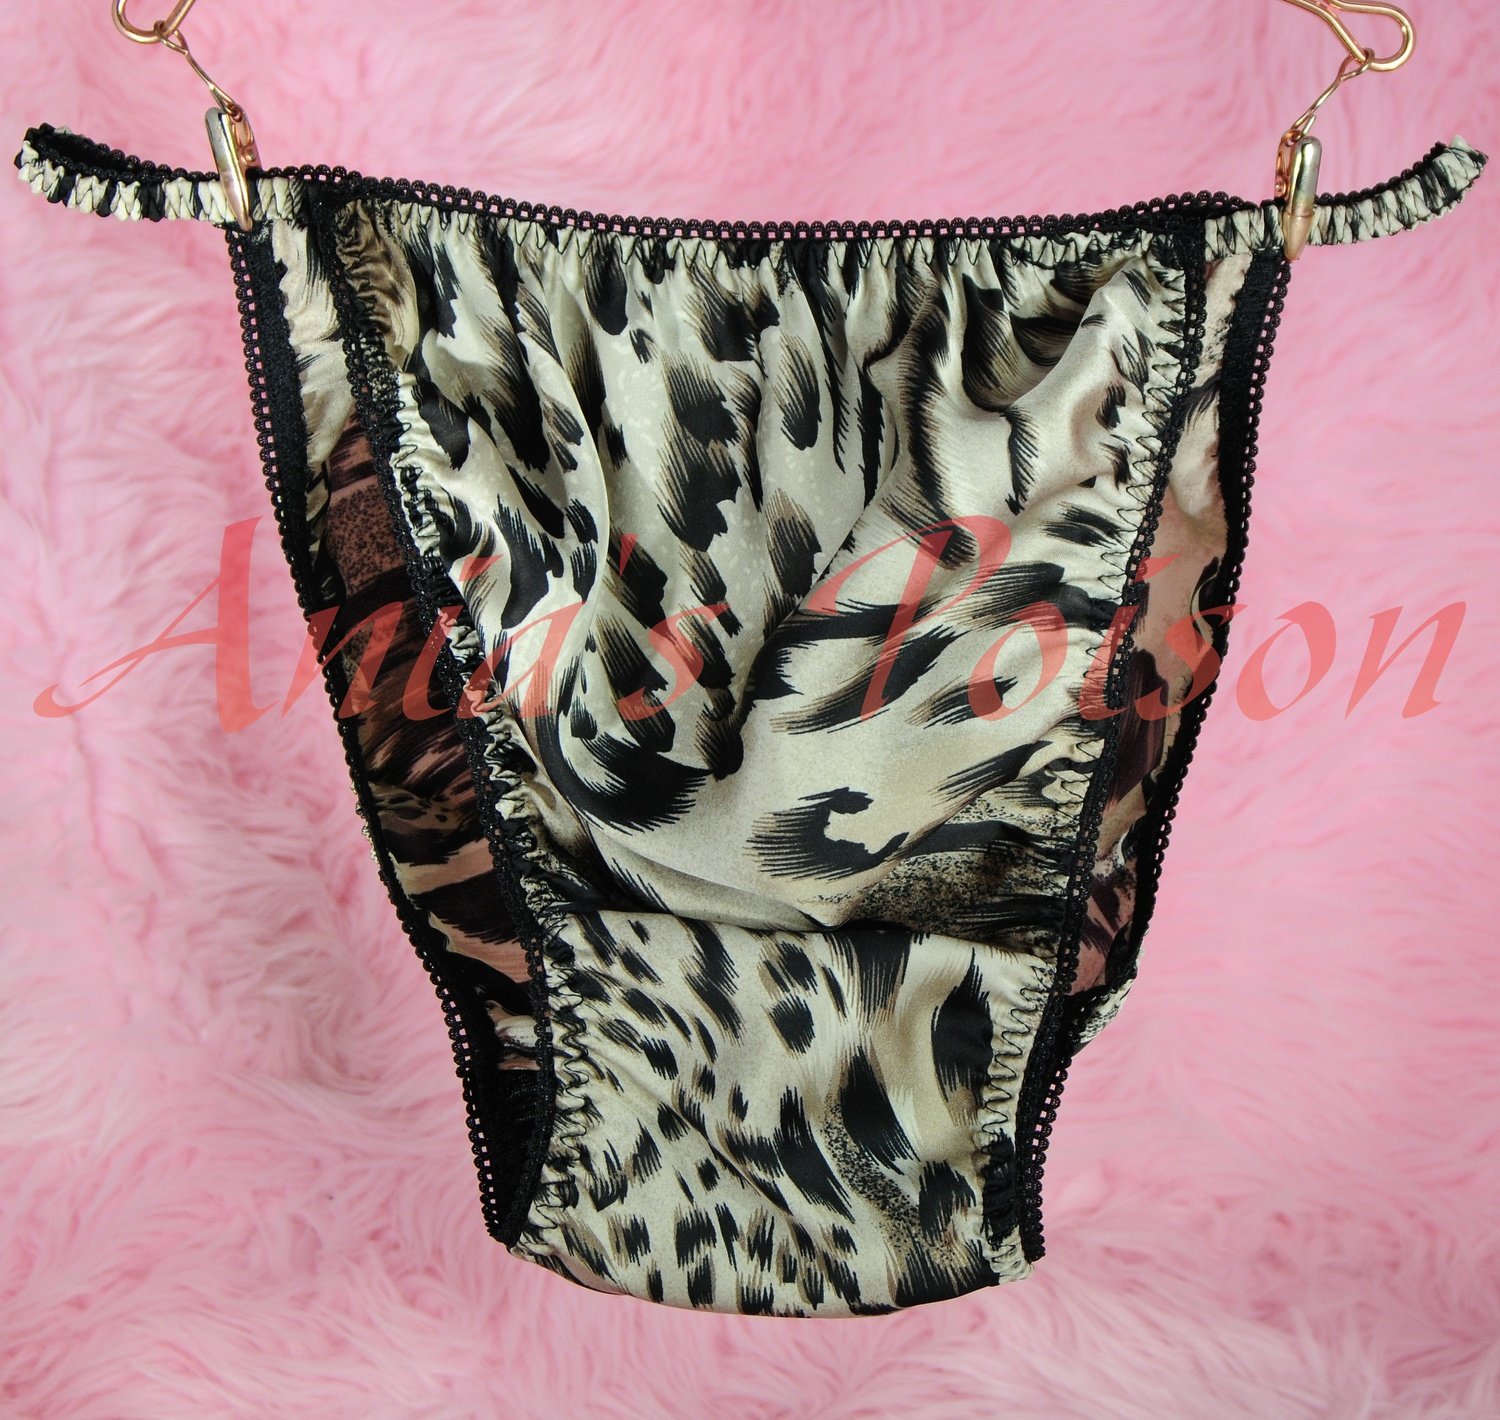 Ania's Poison MANties S - XXL Polka Dot shiny Rare 100% polyester string bikini sissy mens underwear panties